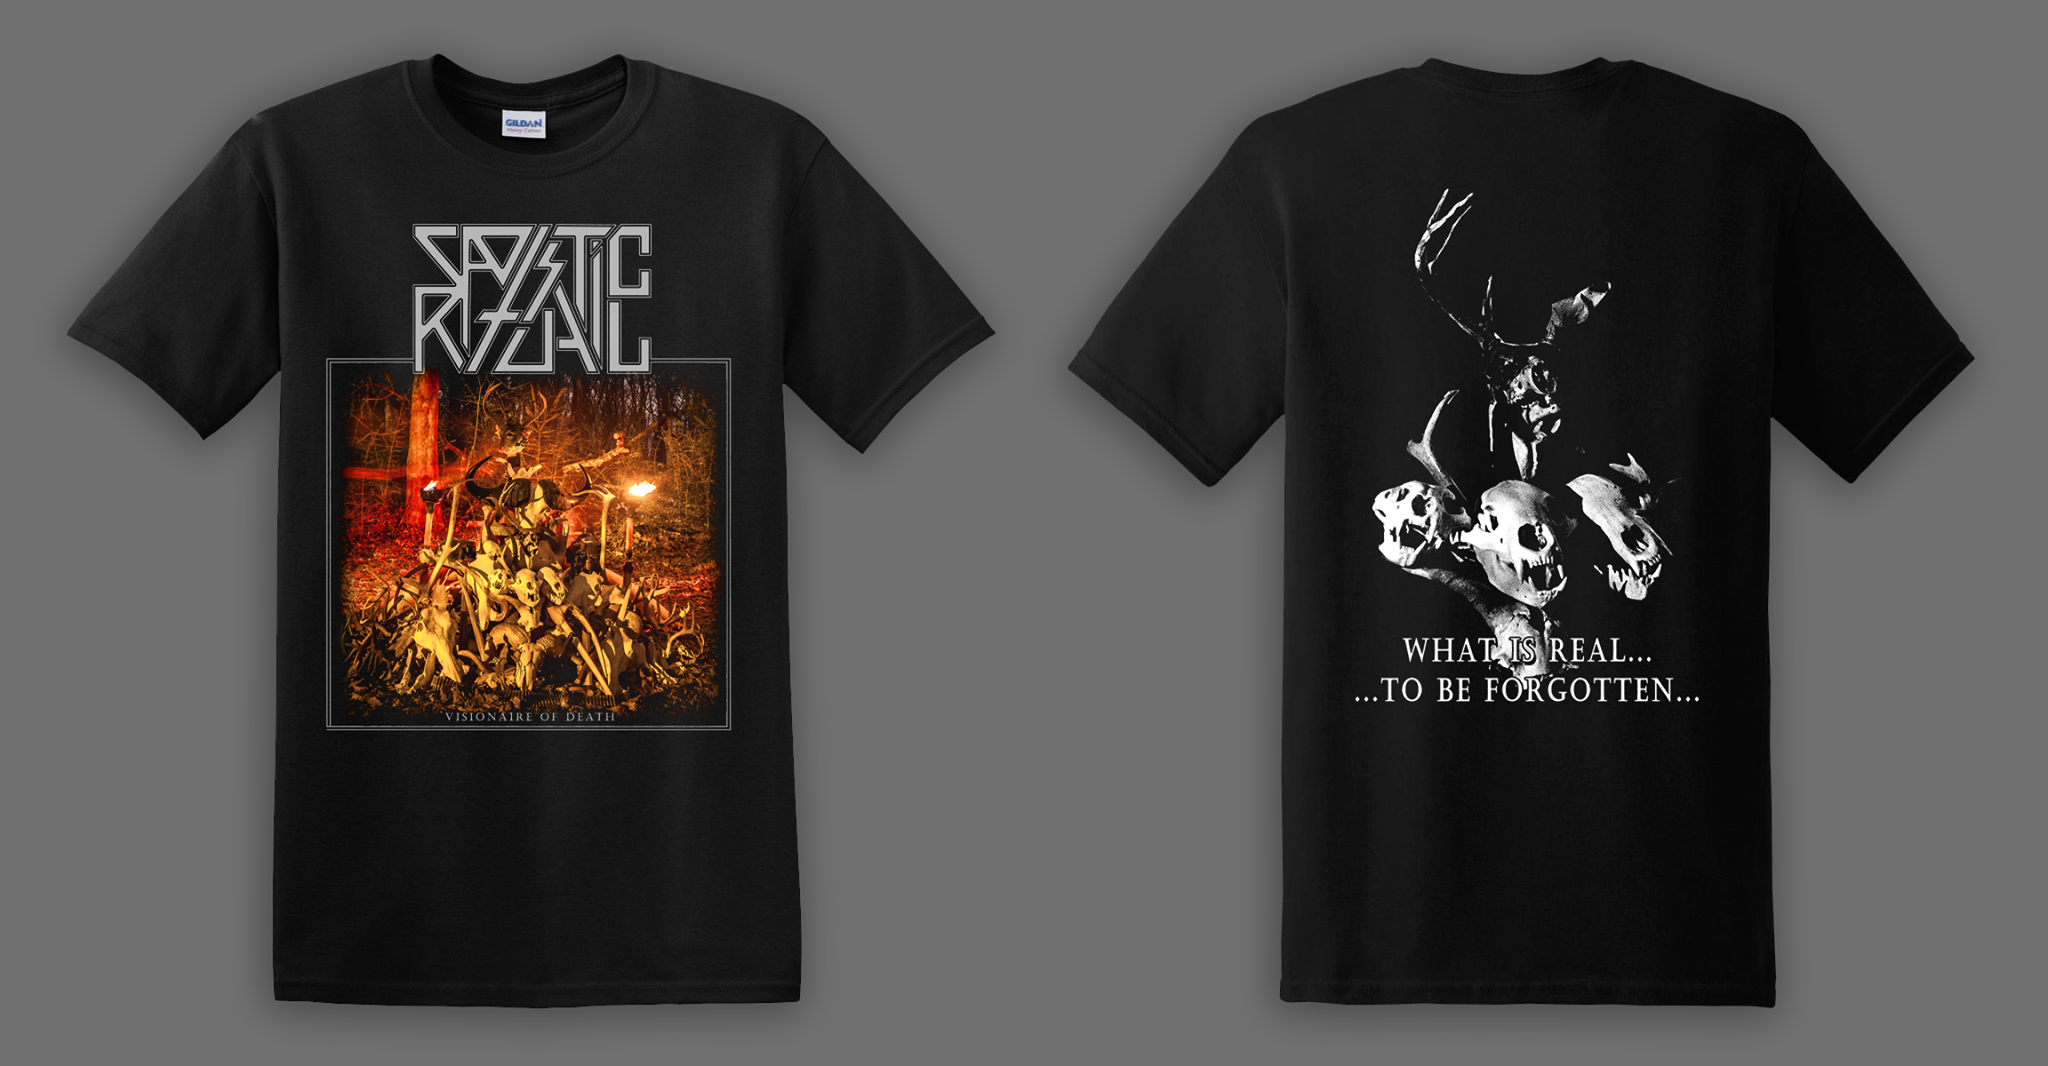 Sadistic Ritual "Visionare" shirt 3XL